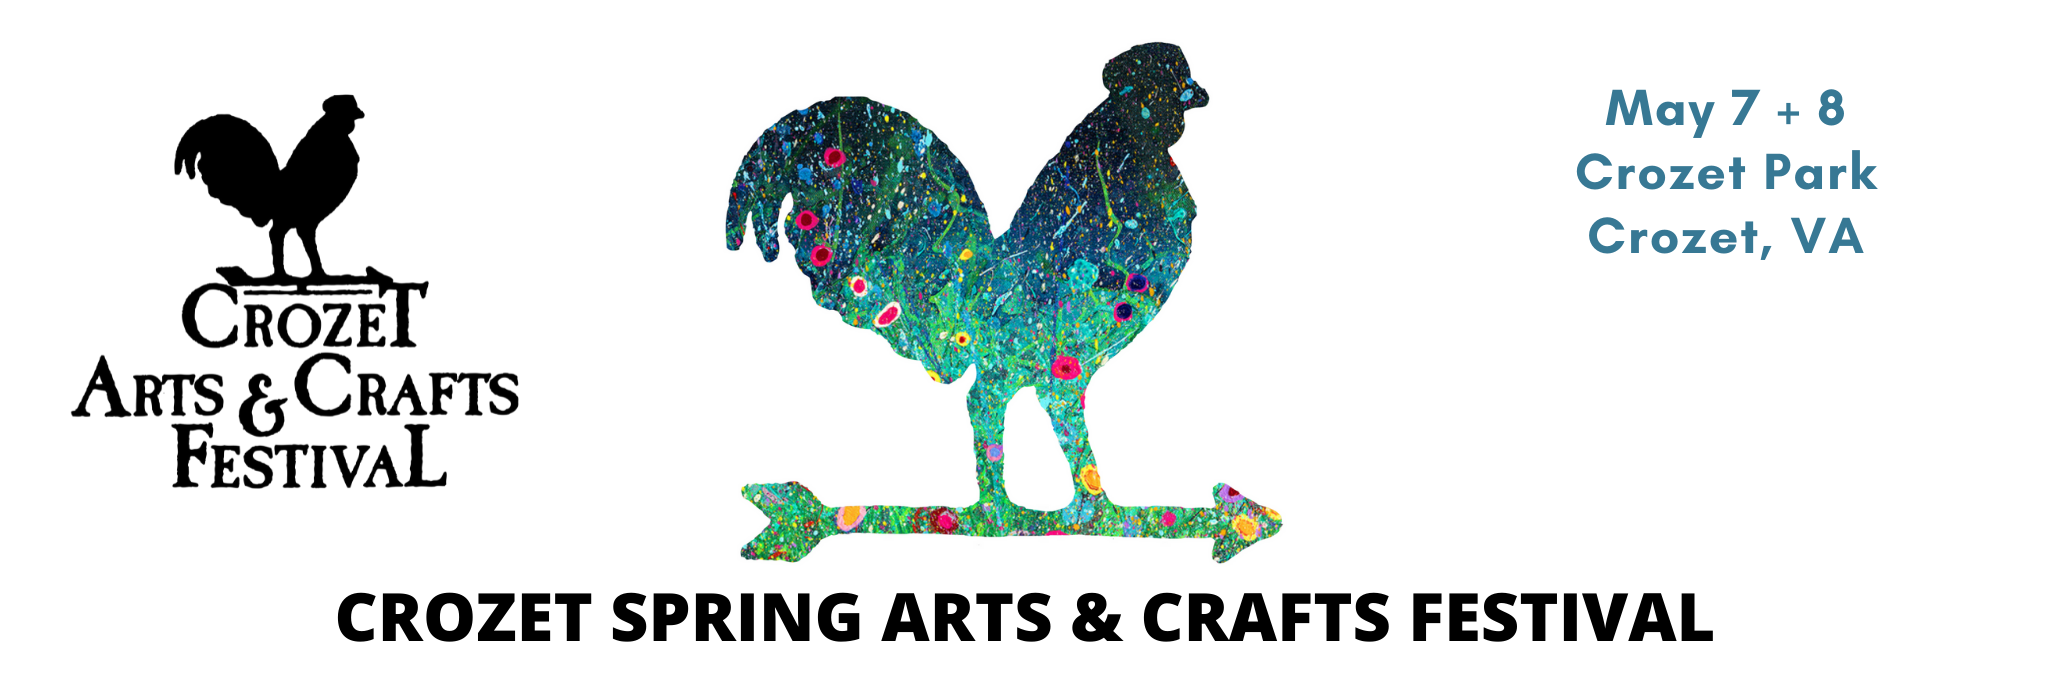 Crozet Arts & Crafts Festival: May 7-8, 2022